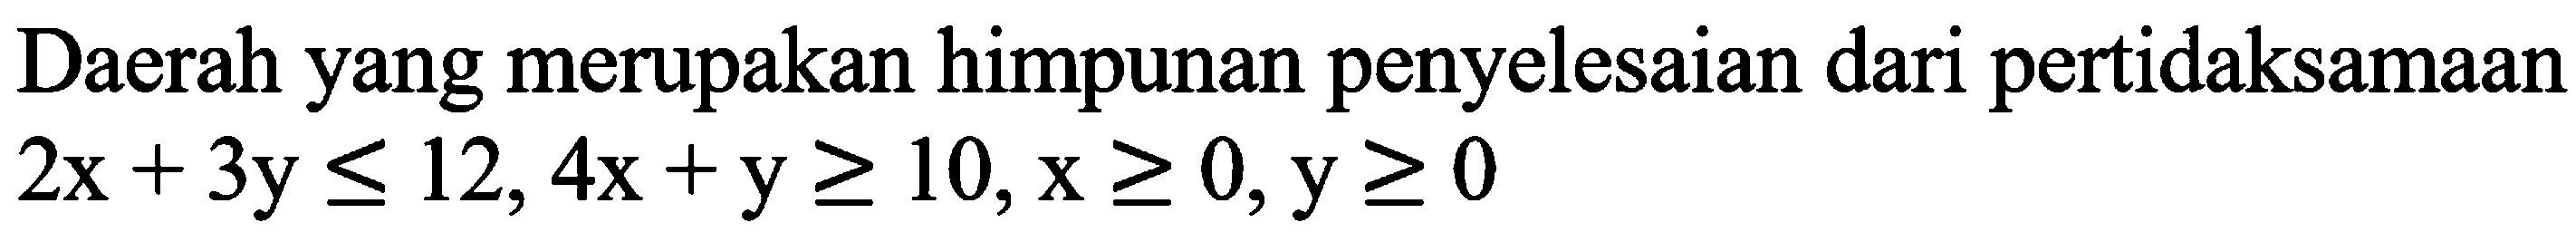 Daerah yang merupakan himpunan penyelesaian dari pertidaksamaan  2x+3 y <= 12, 4x+y >= 10, x >= 0, y >= 0 